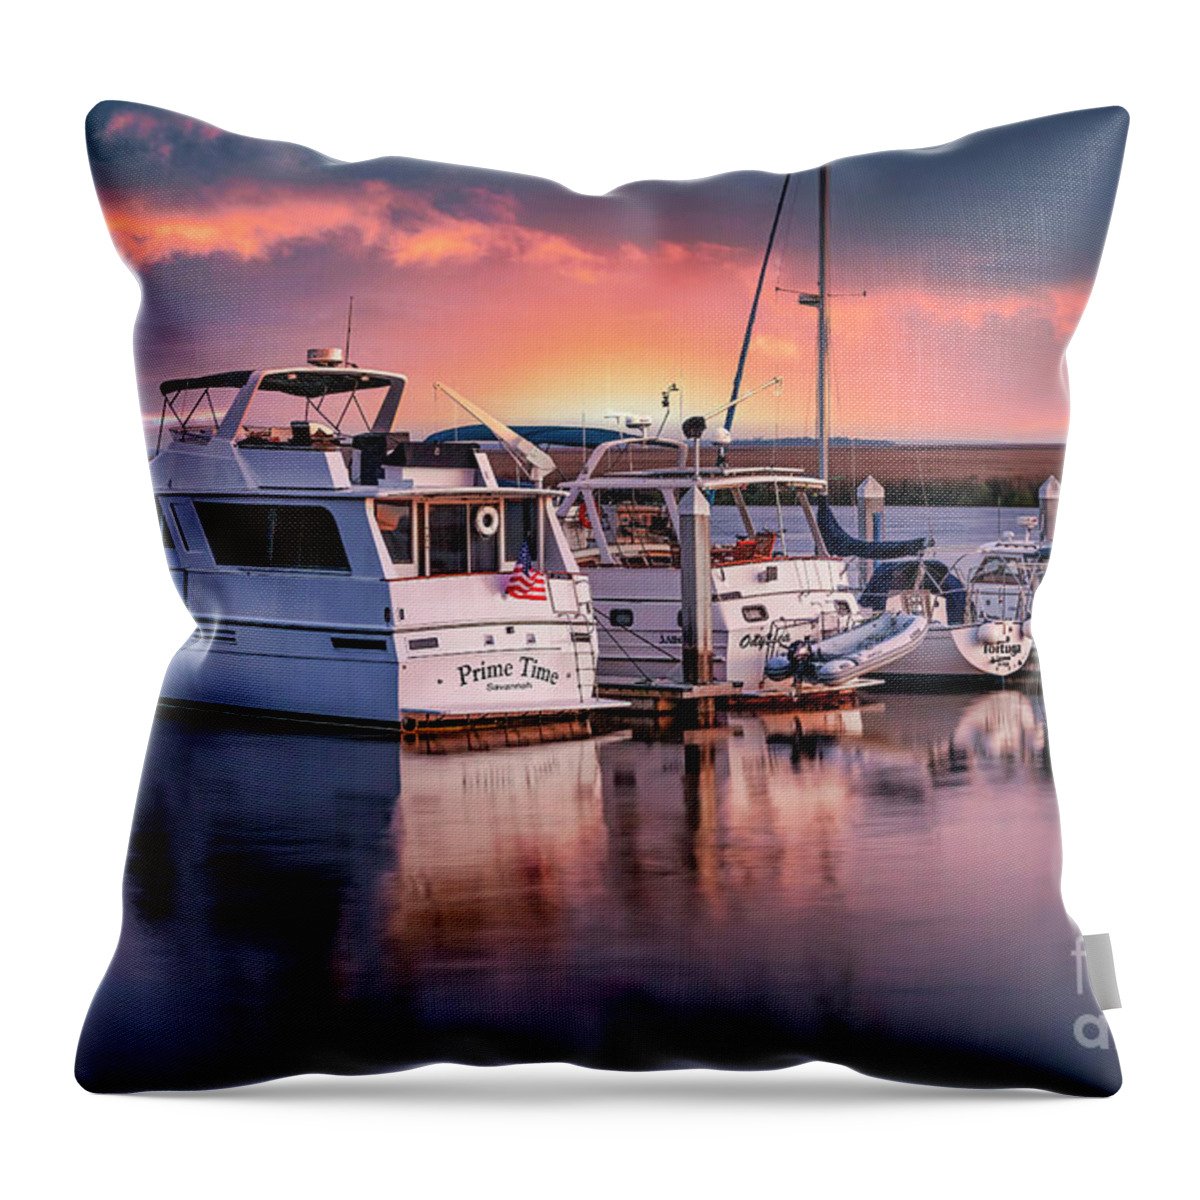 Savannah Throw Pillow featuring the photograph Dreamy Skies in Savannah by Shelia Hunt